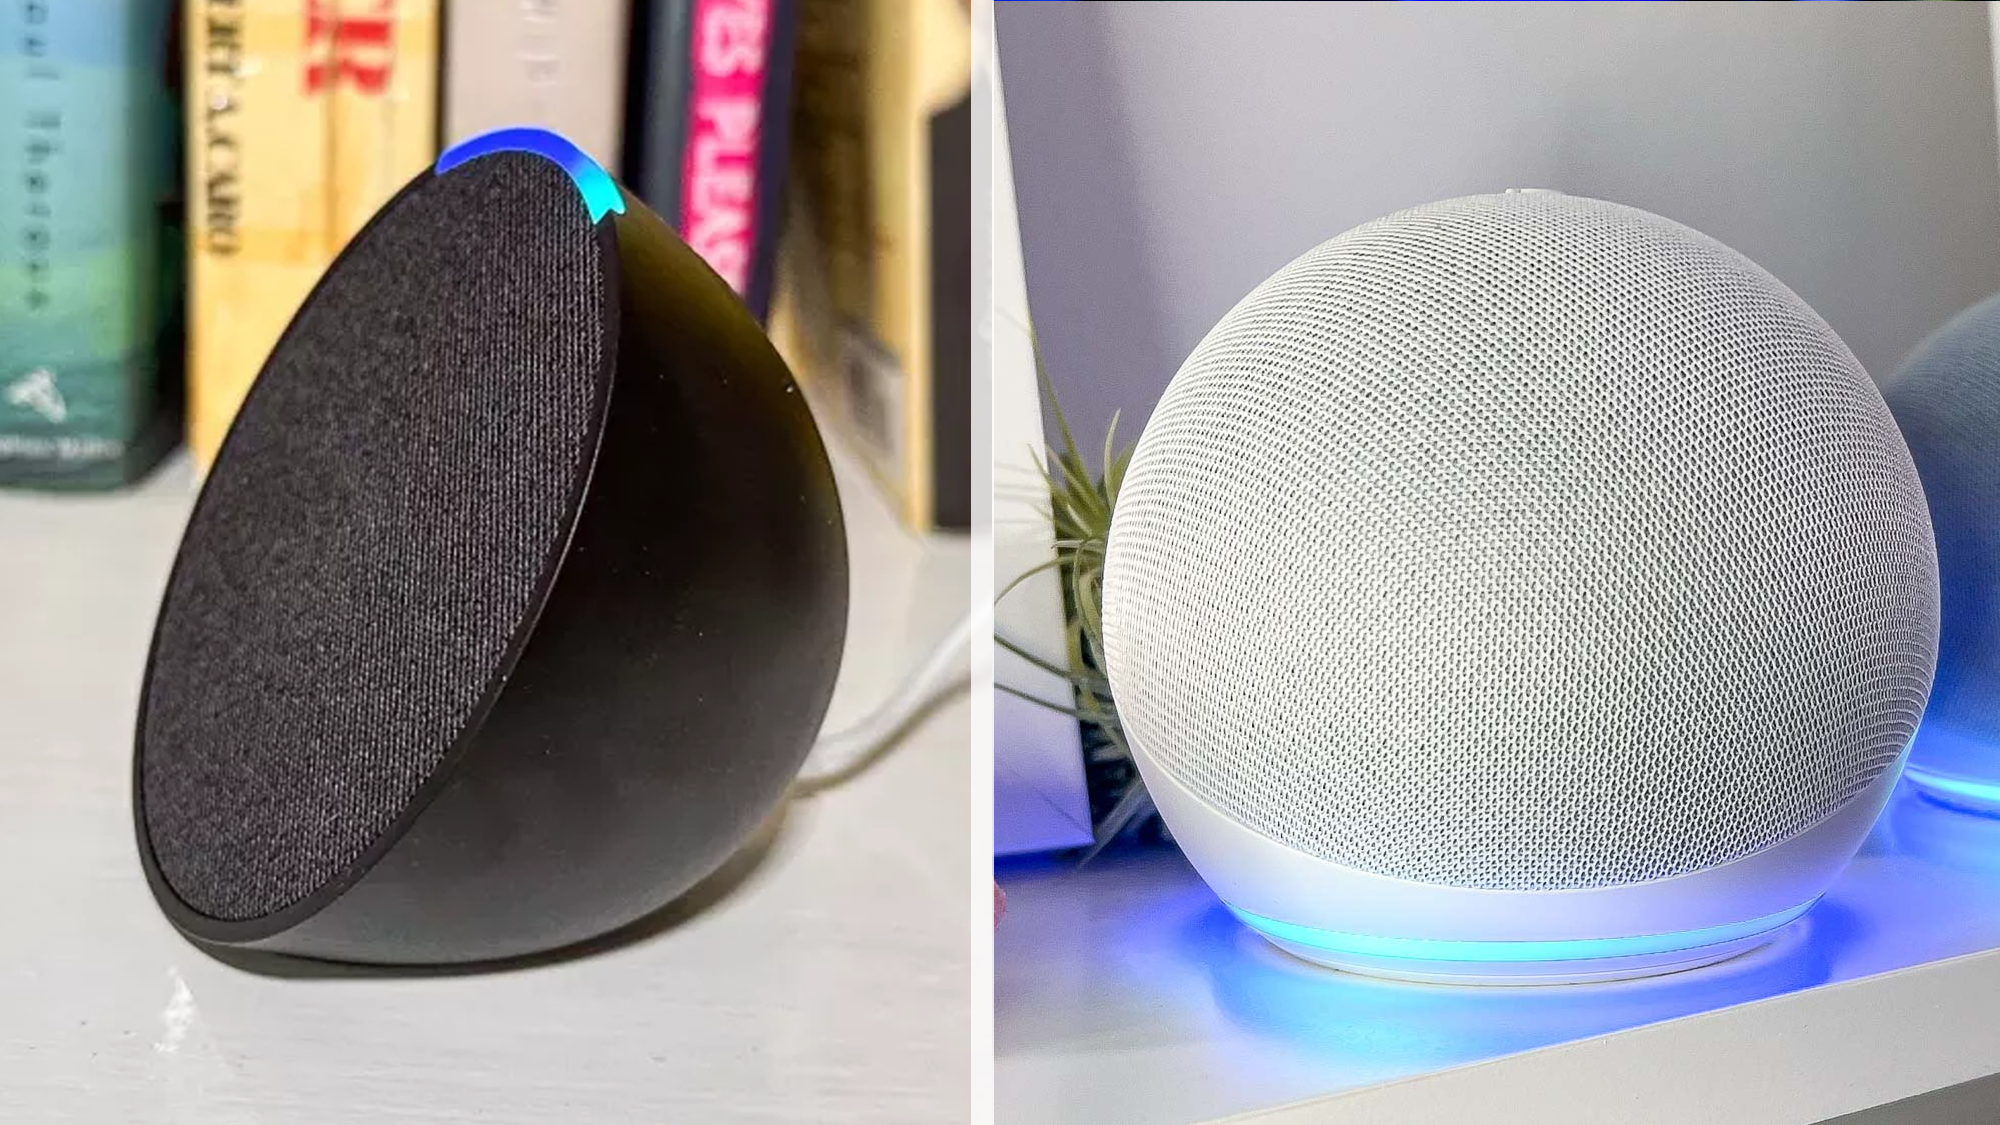 Echo Pop | Full sound compact smart speaker with Alexa | Lavender  Bloom